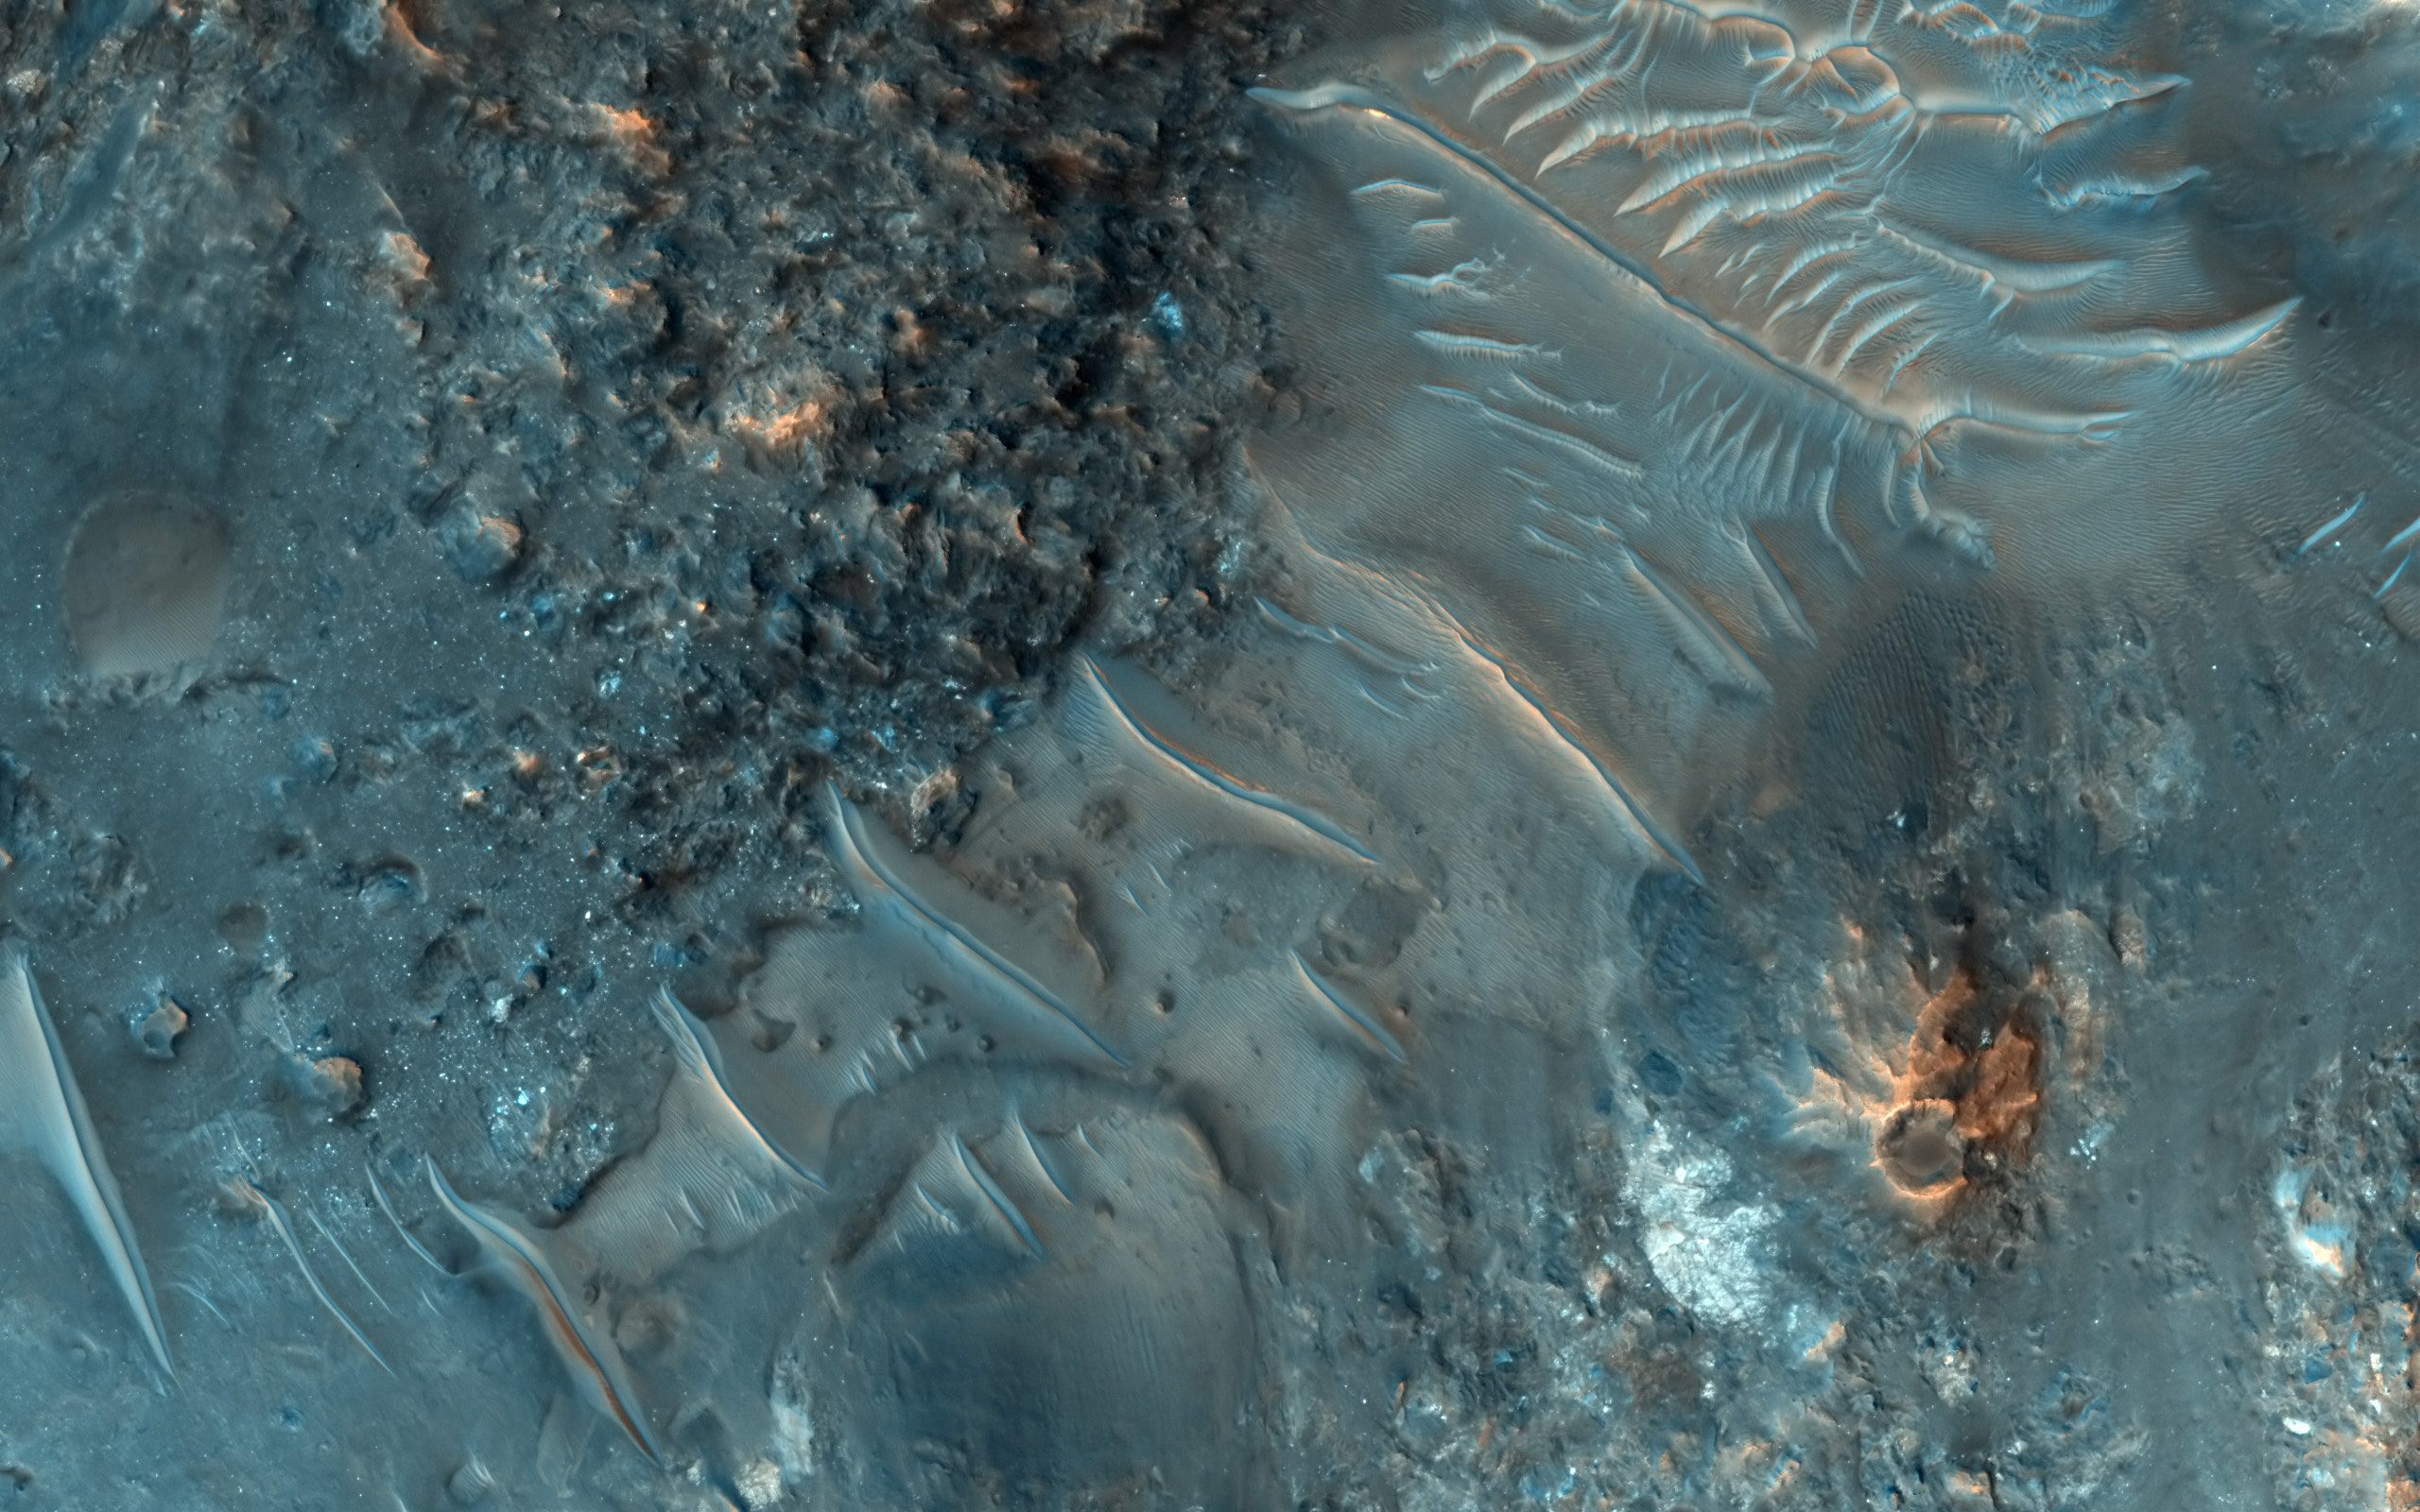 Sci-fi Mars desktop wallpaper - Tyrrhenaterra crater on Mars